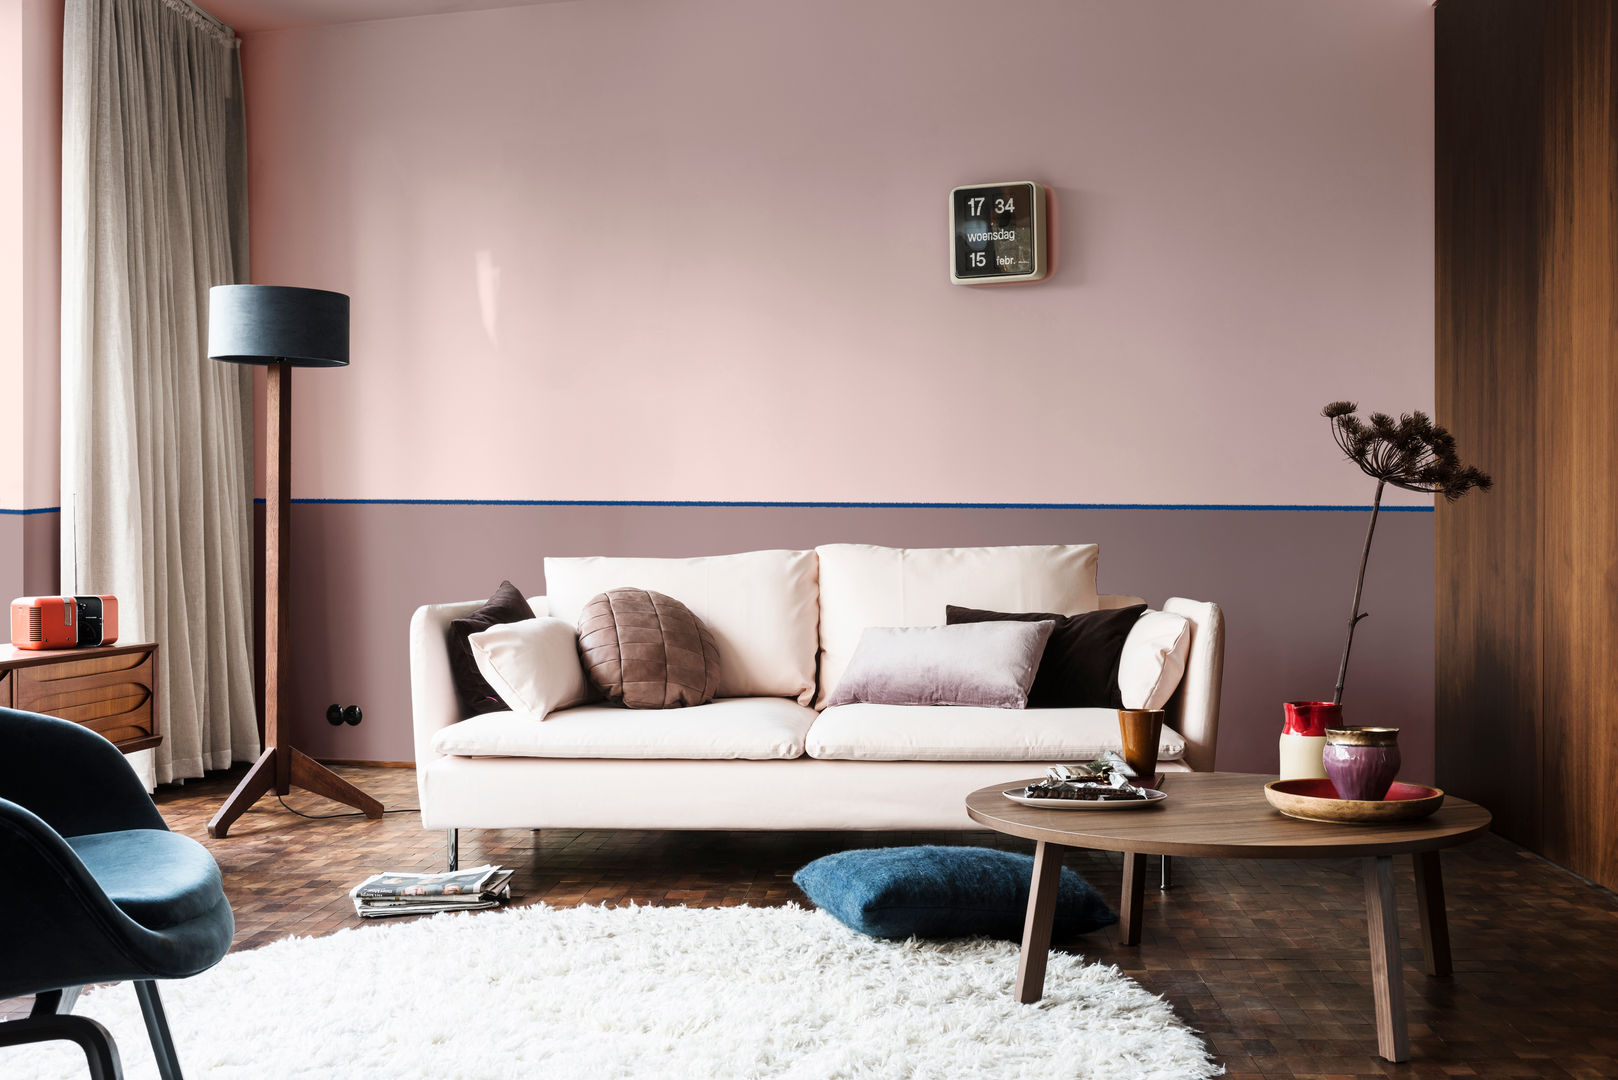 The Heart Wood Home Dulux UK غرفة المعيشة pink,living room,lounge,heartwood,heart wood,paint,dulux,purple,colour of the year,relaxed,scandinavian,tonal